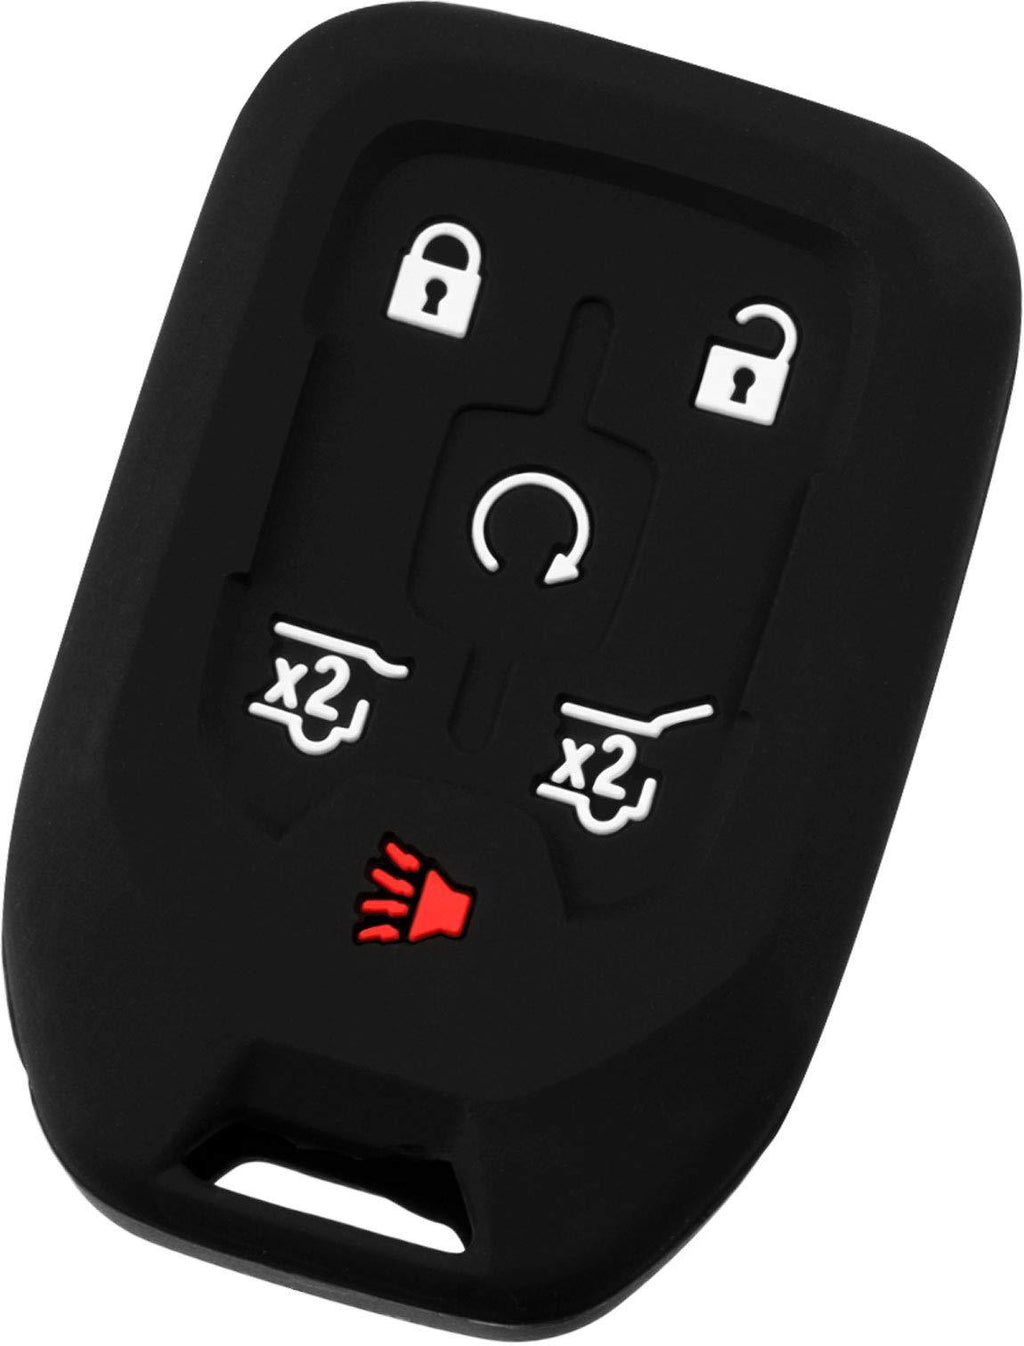  [AUSTRALIA] - KeyGuardz Keyless Entry Remote Car Smart Key Fob Outer Shell Cover Soft Rubber Protective Case for Suburban Tahoe Yukon HYQ1AA Black